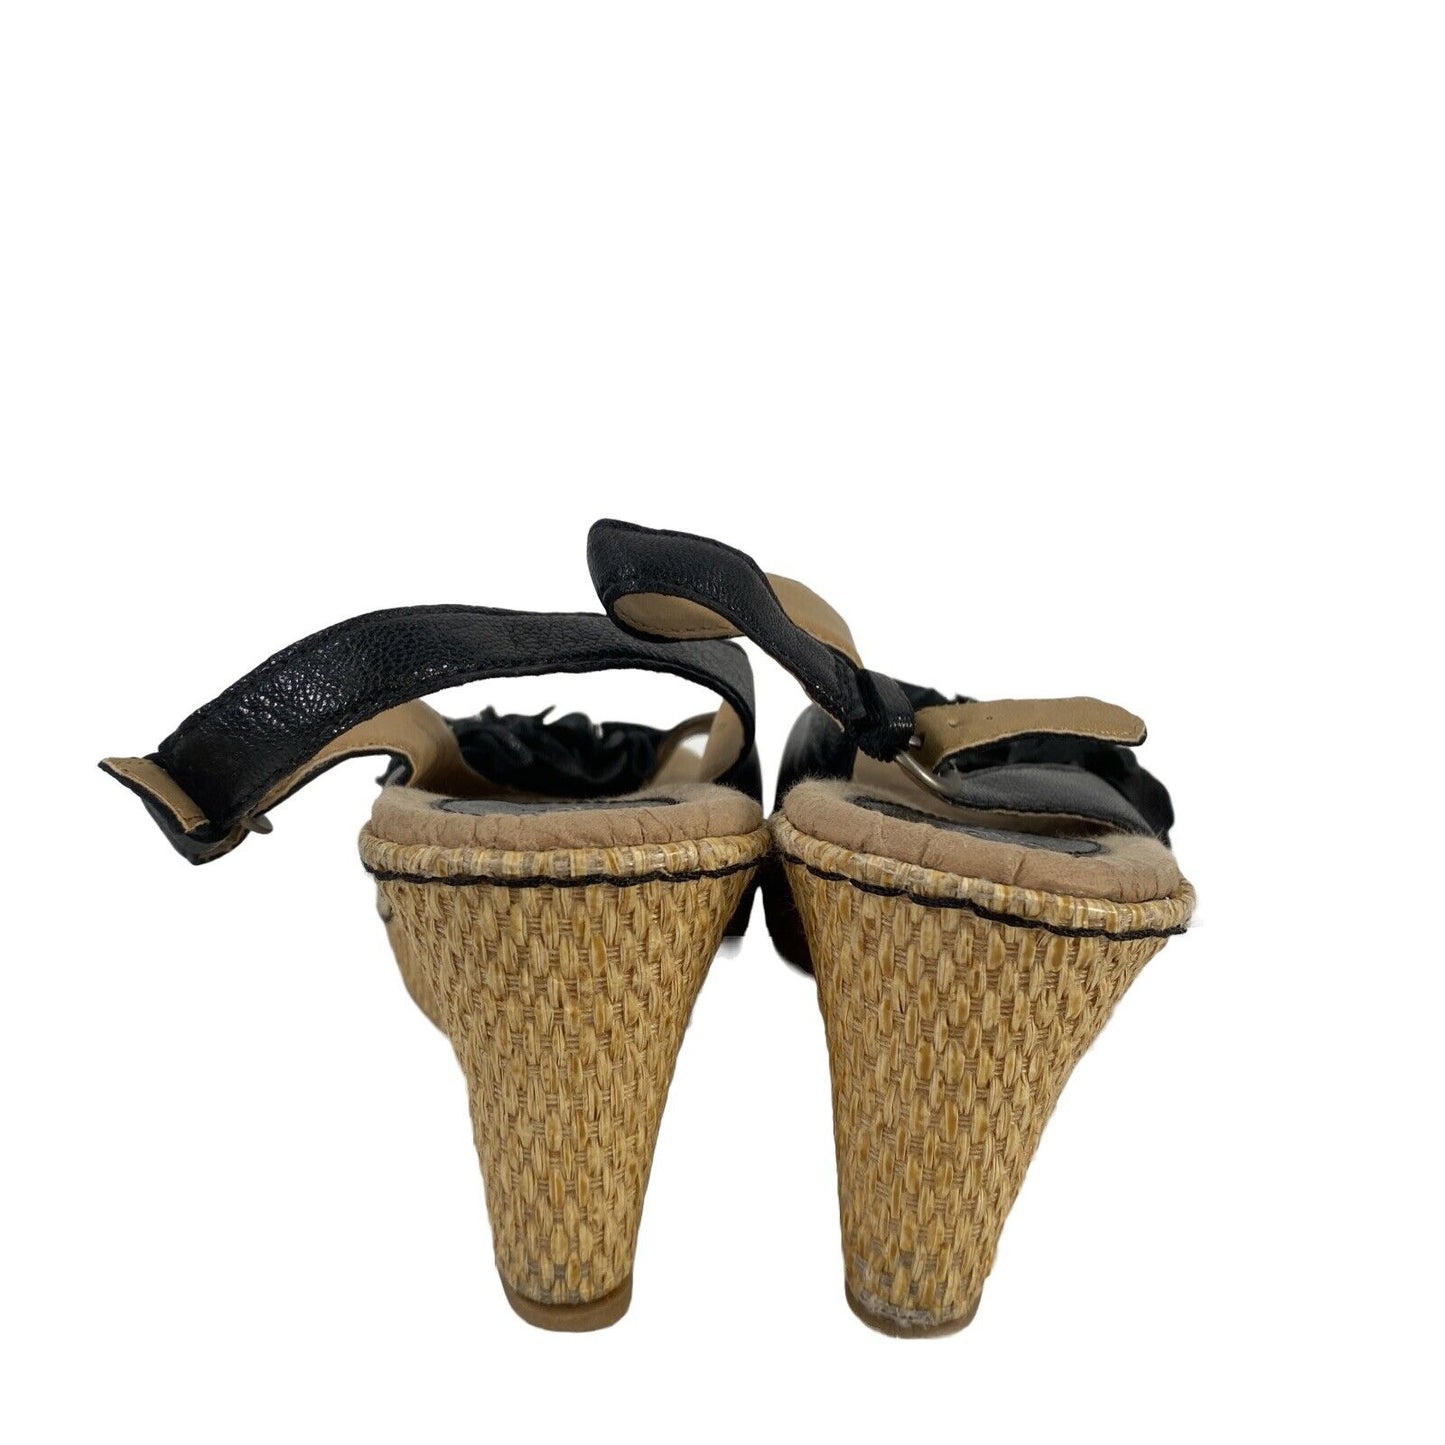 BOC Women's Black Leather Slingback Floral Accent Wedge Sandals - 8